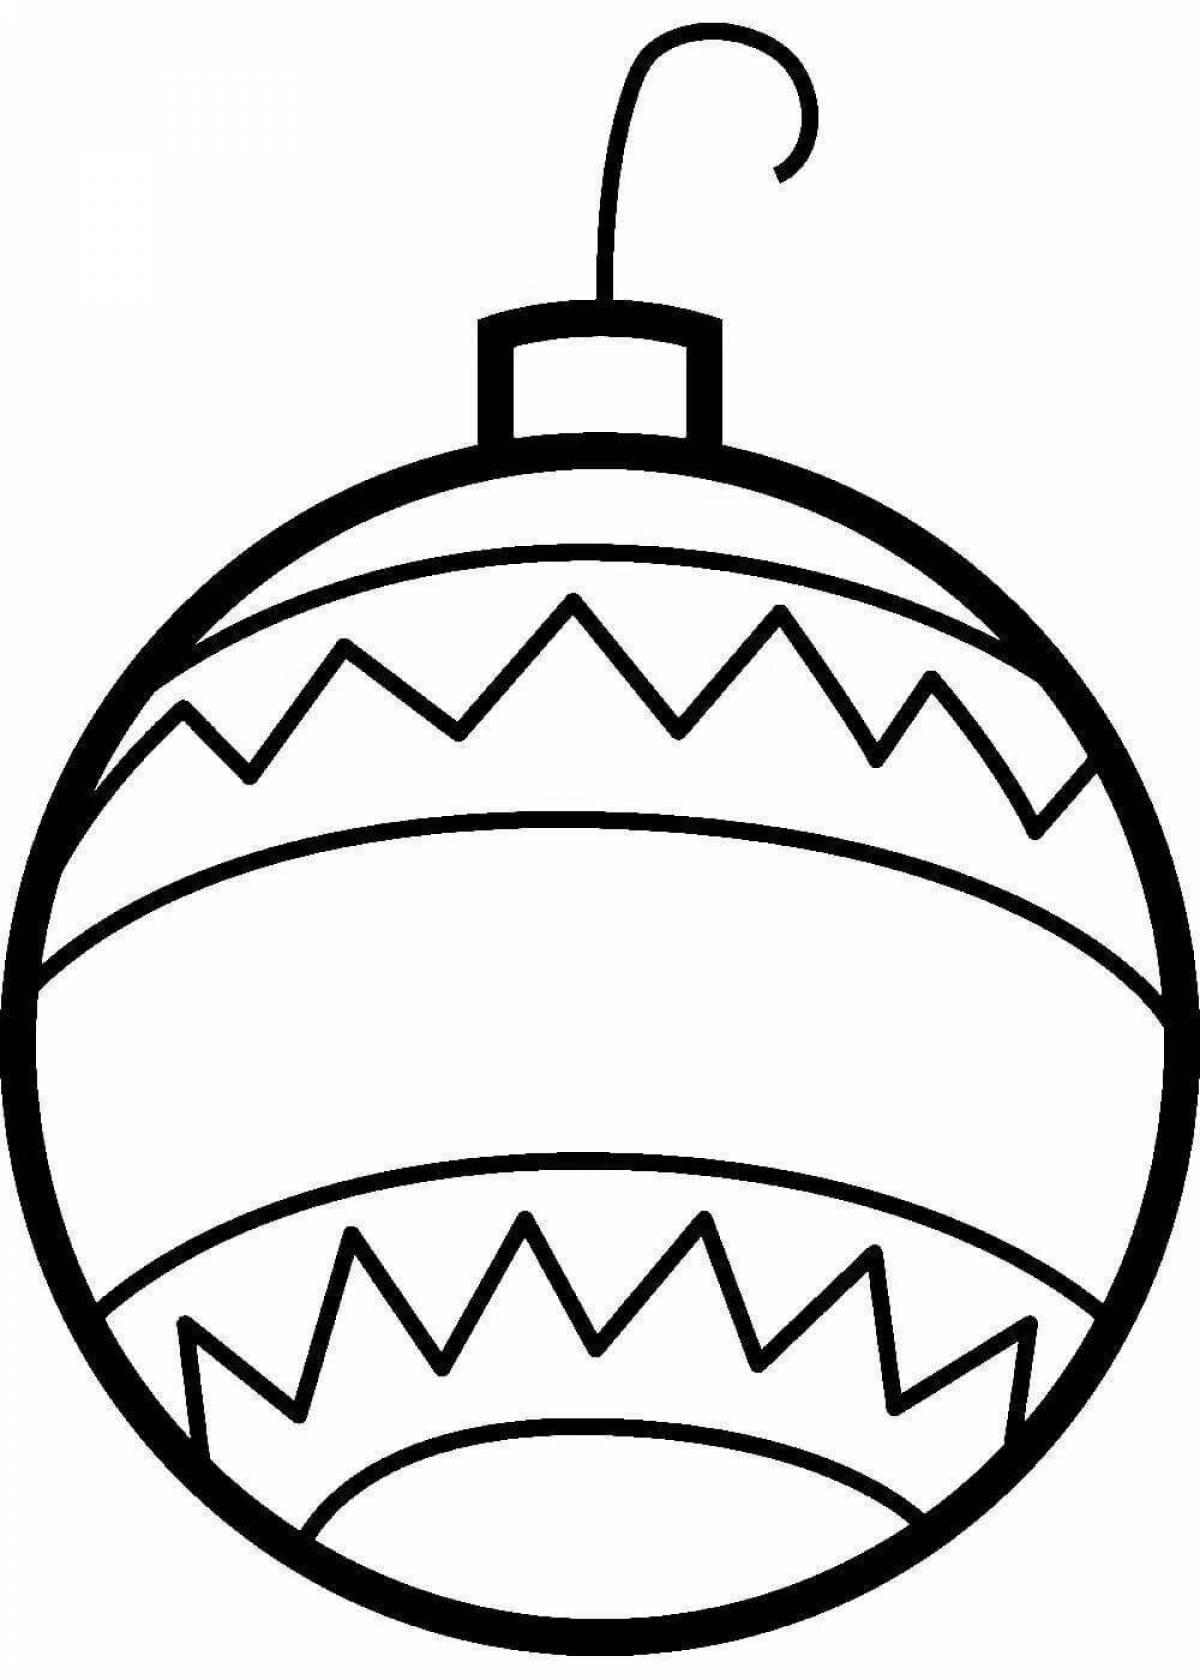 Christmas ball coloring page for kids